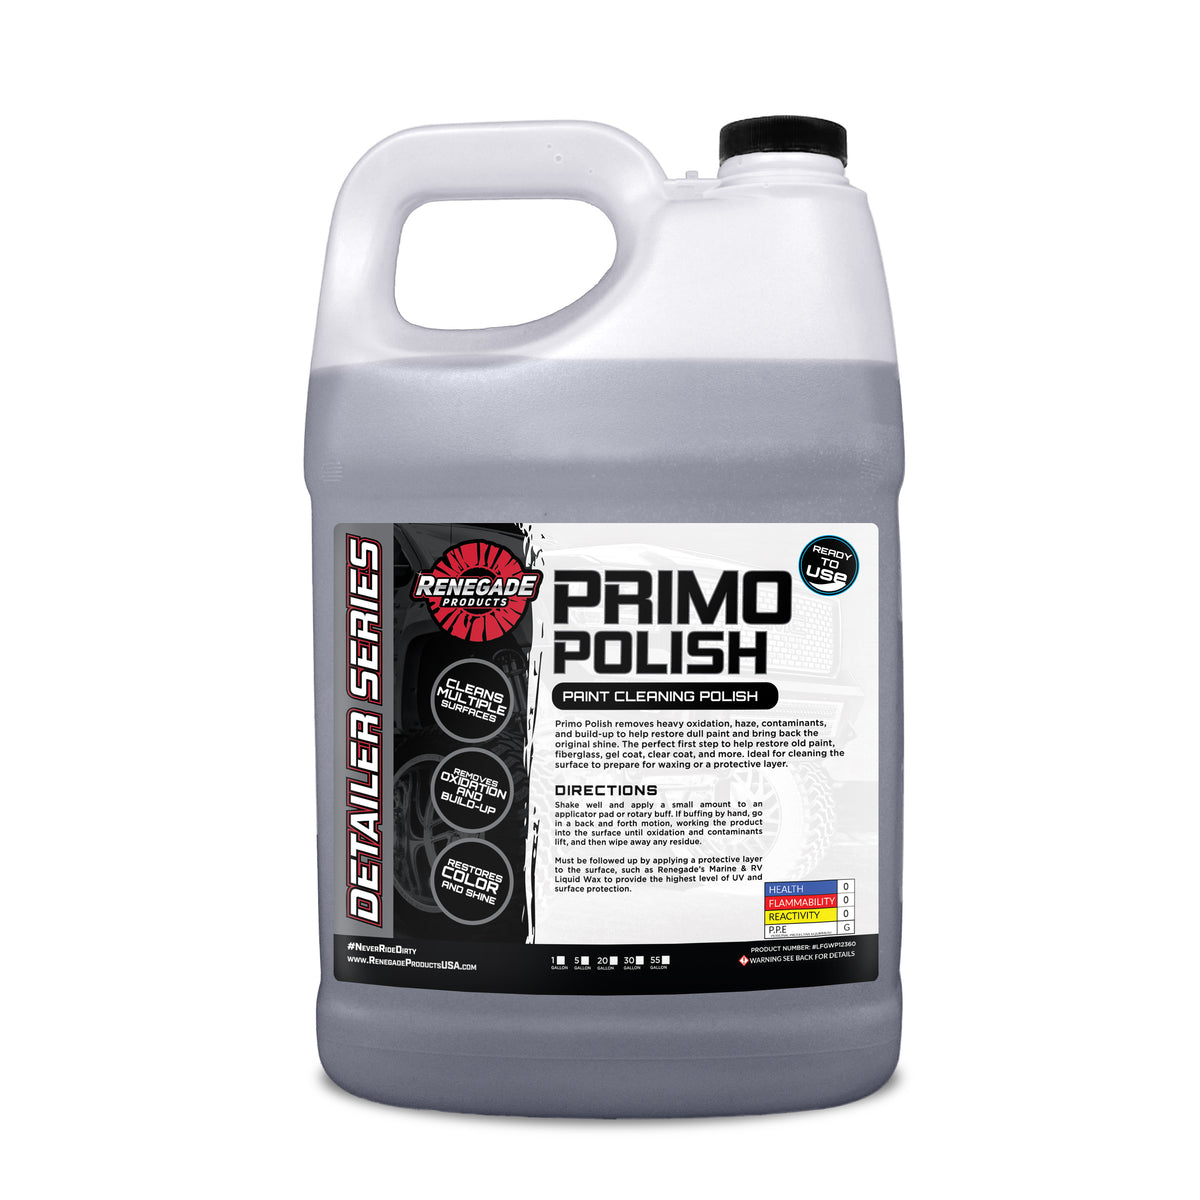 Primo Polish Paint Cleaning Polish - 1 Gallon